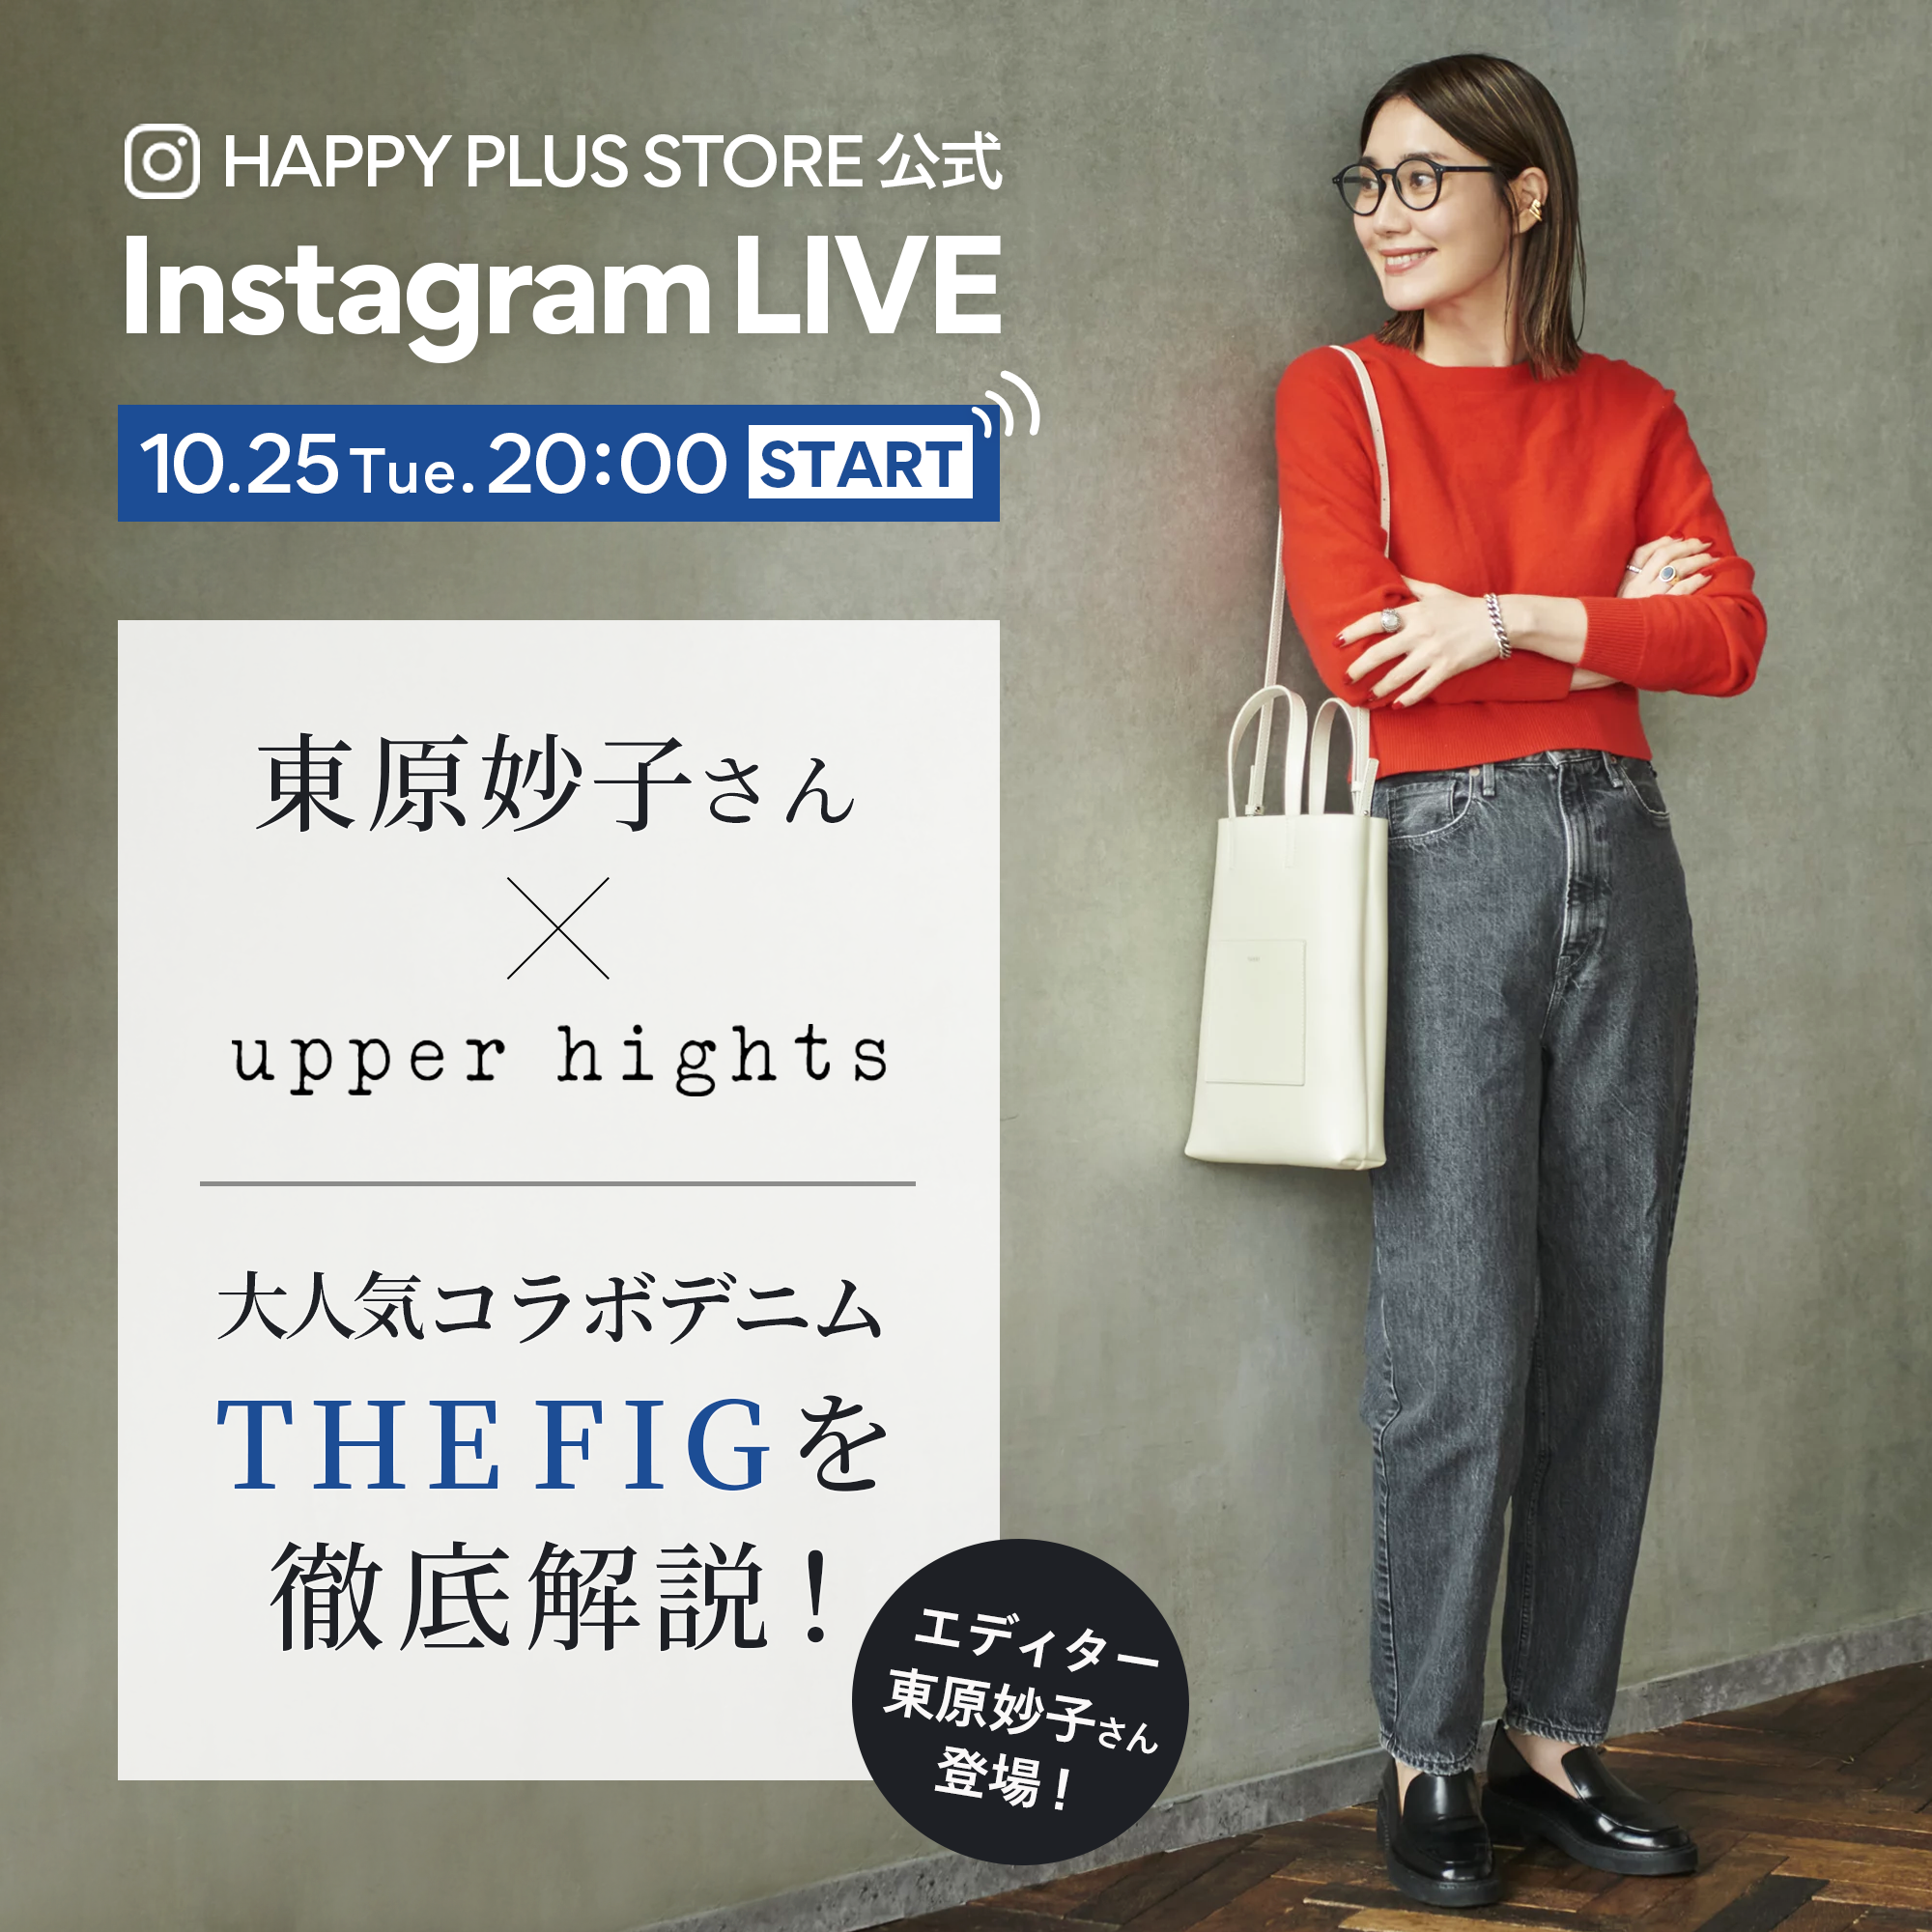 upper hights 【THE FIG】 東原妙子xupper hights - パンツ